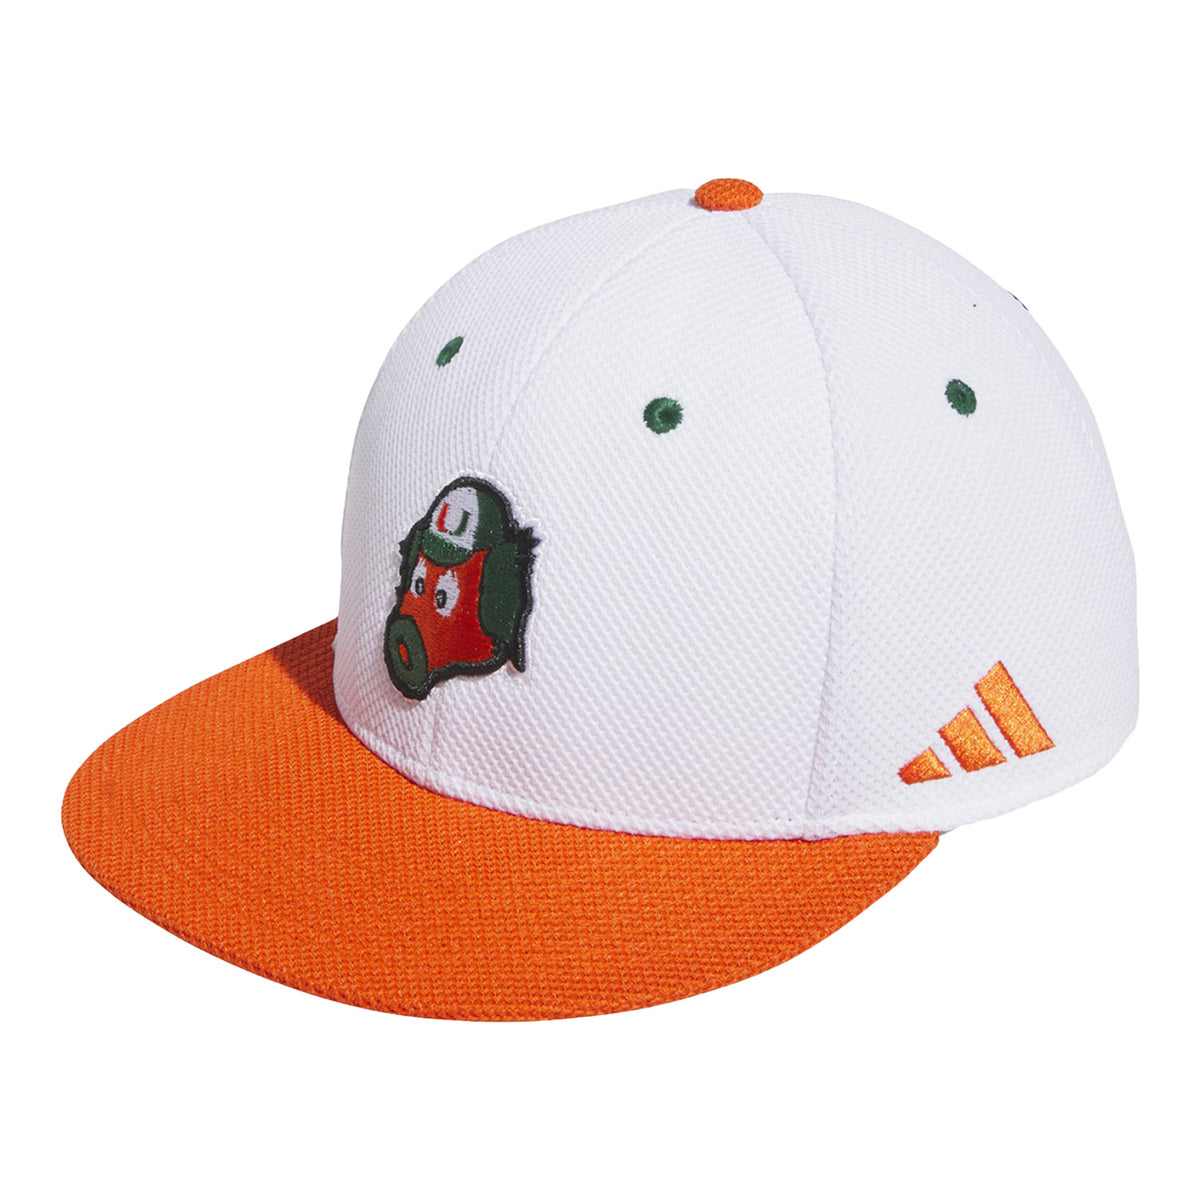 Adidas Miami Baseball Maniac Fitted Hat